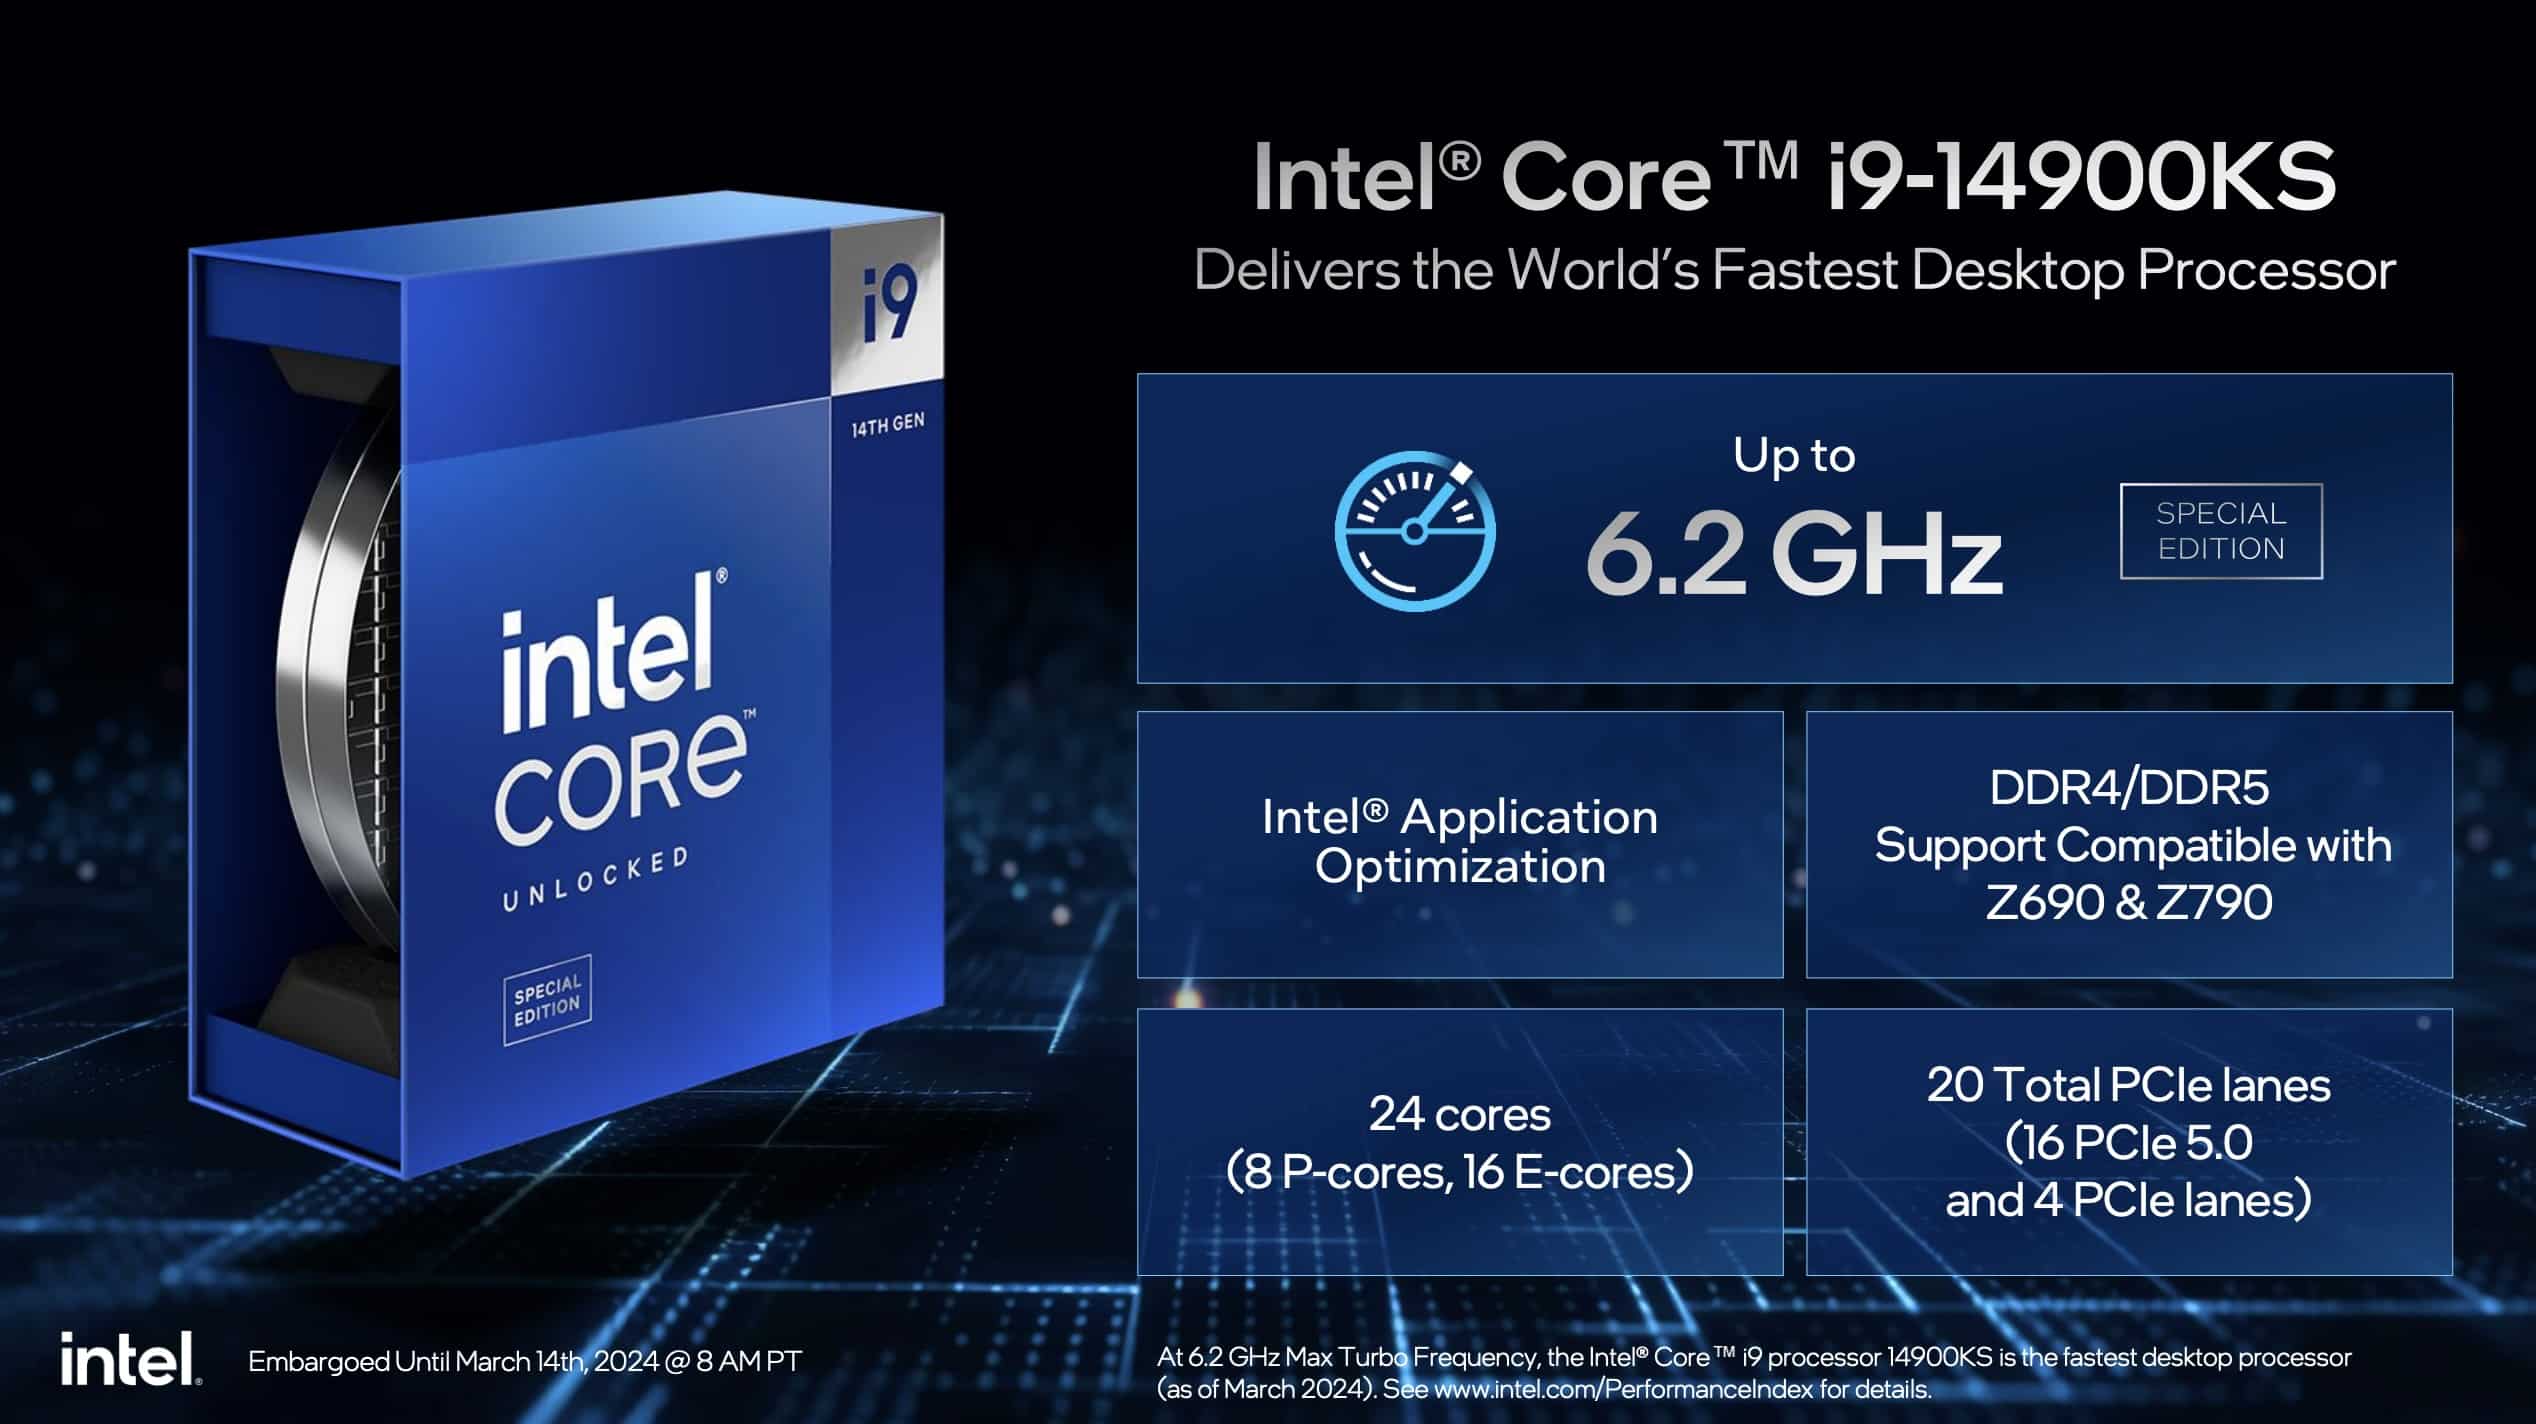  Intel Core i9